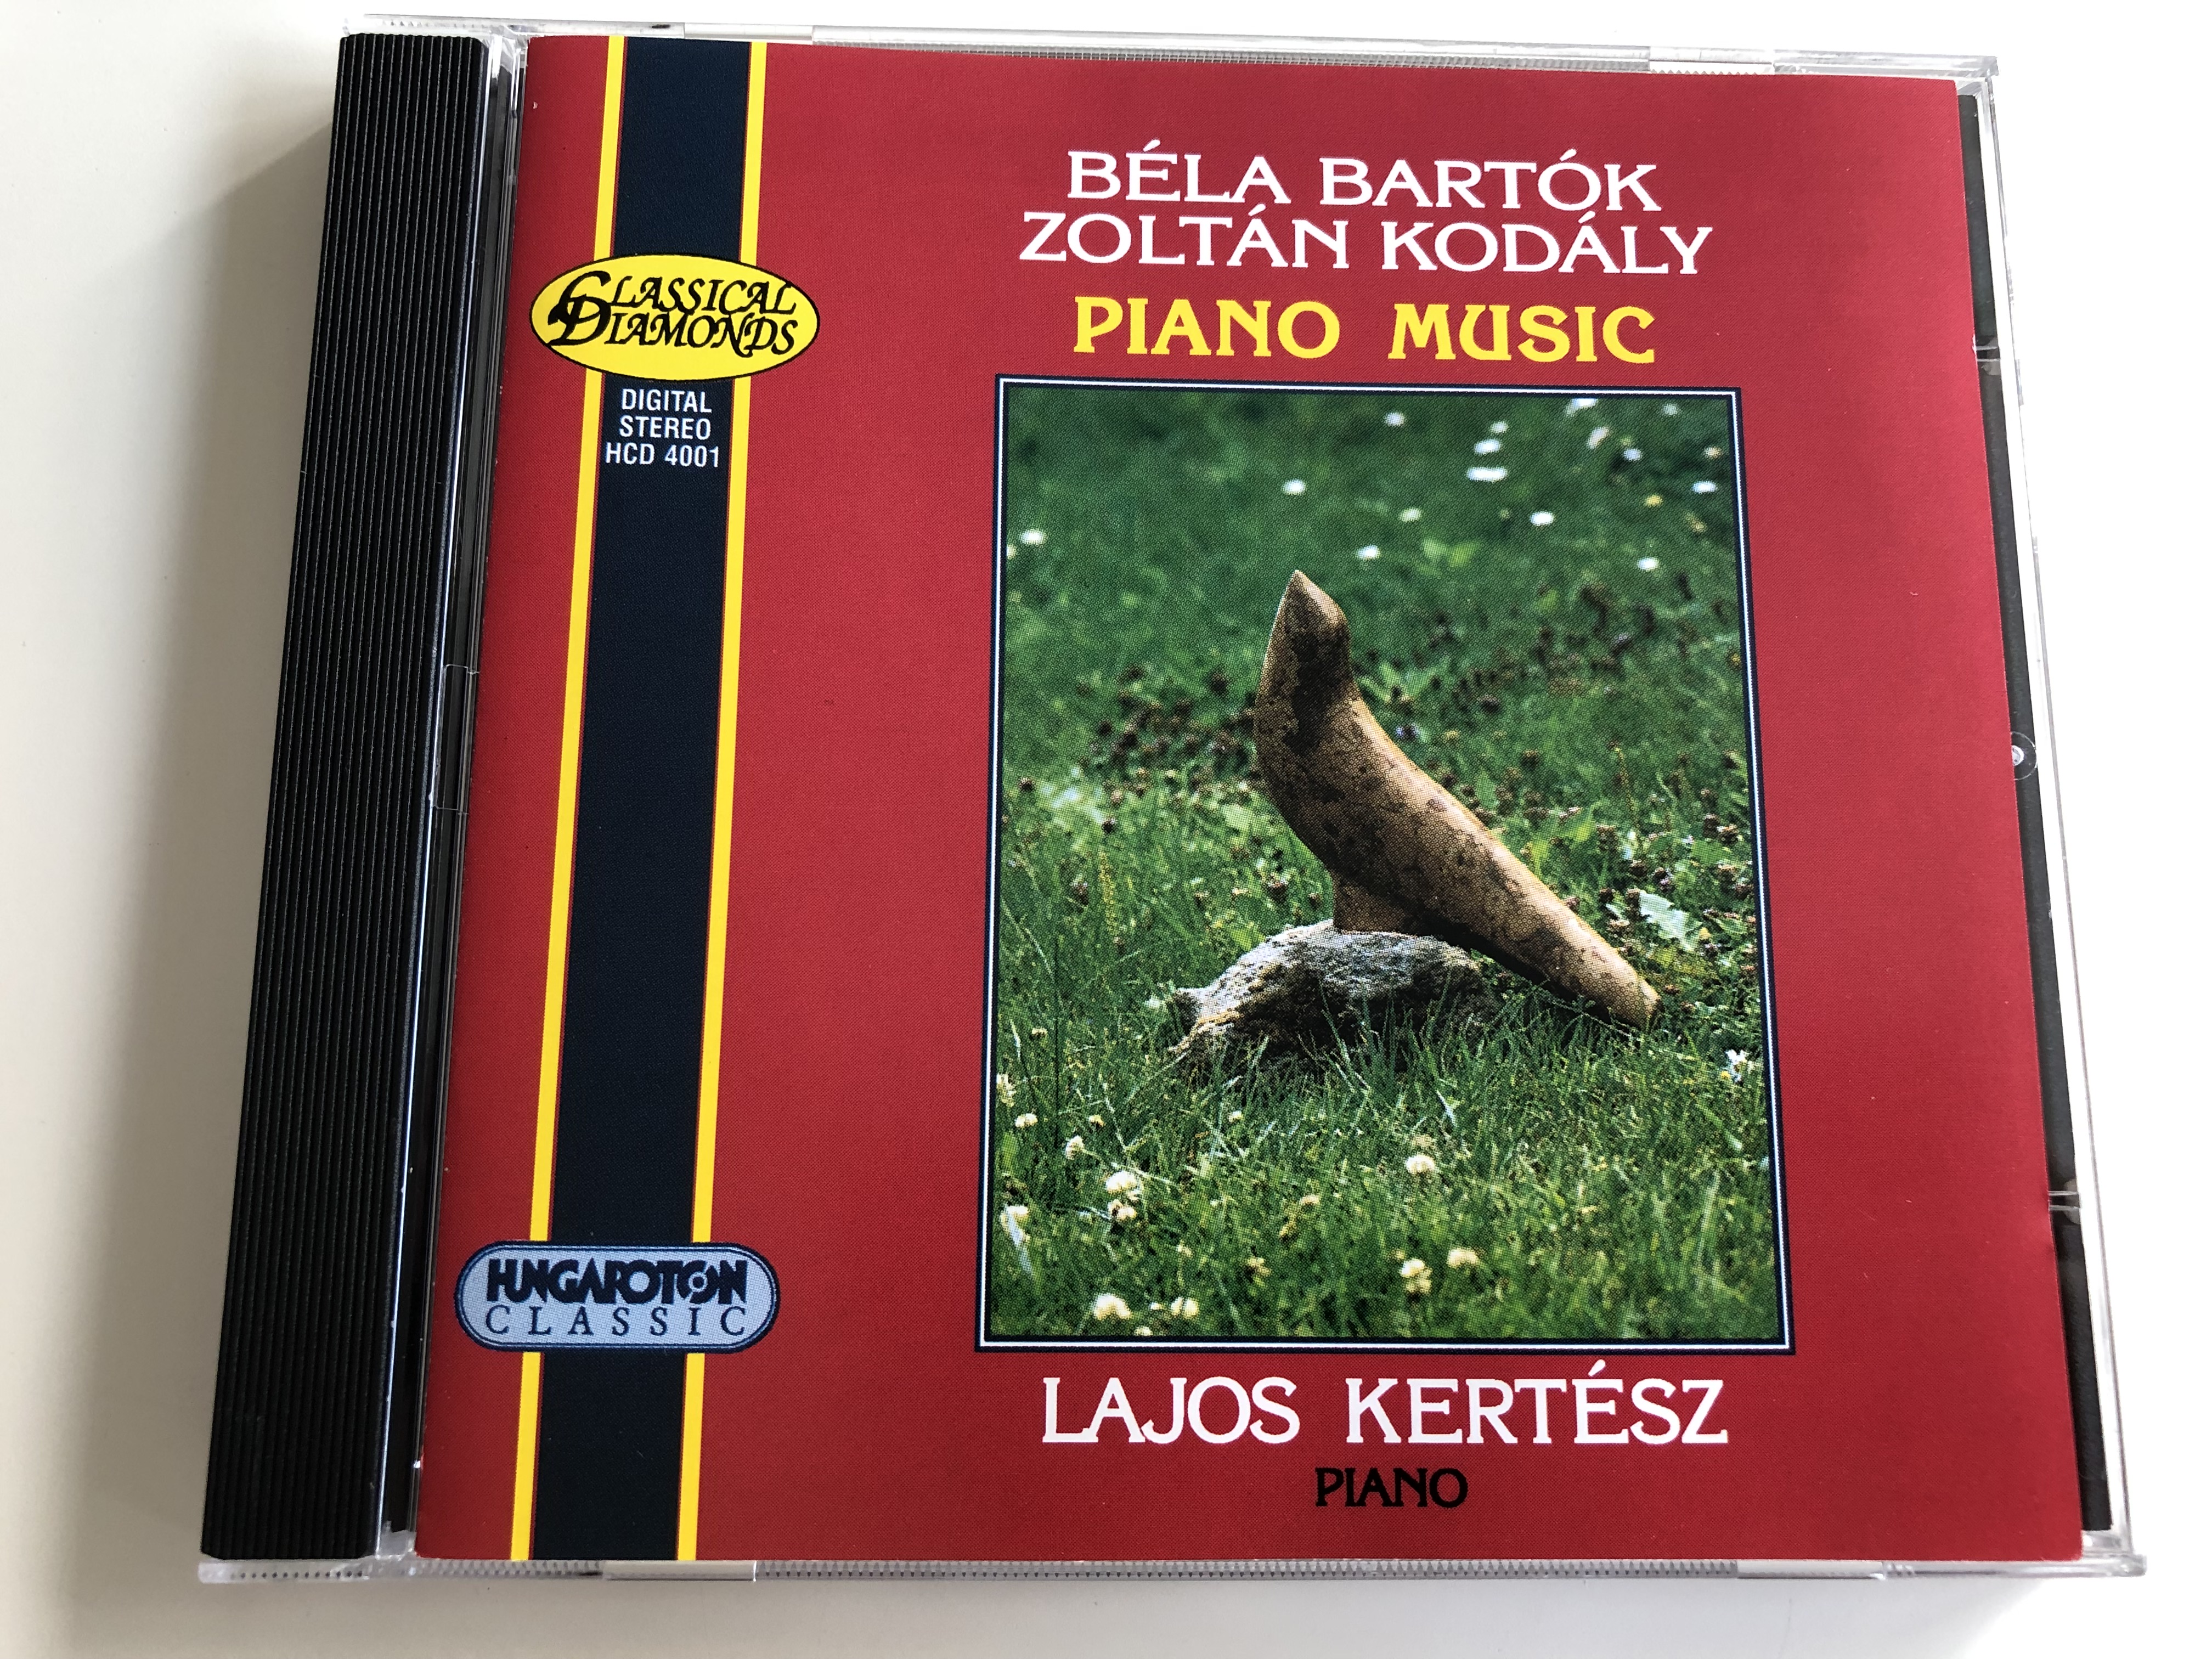 b-la-bart-k-zolt-n-kod-ly-piano-music-lajos-kert-sz-piano-hungaroton-classic-audio-cd-1995-hcd-4001-1-.jpg